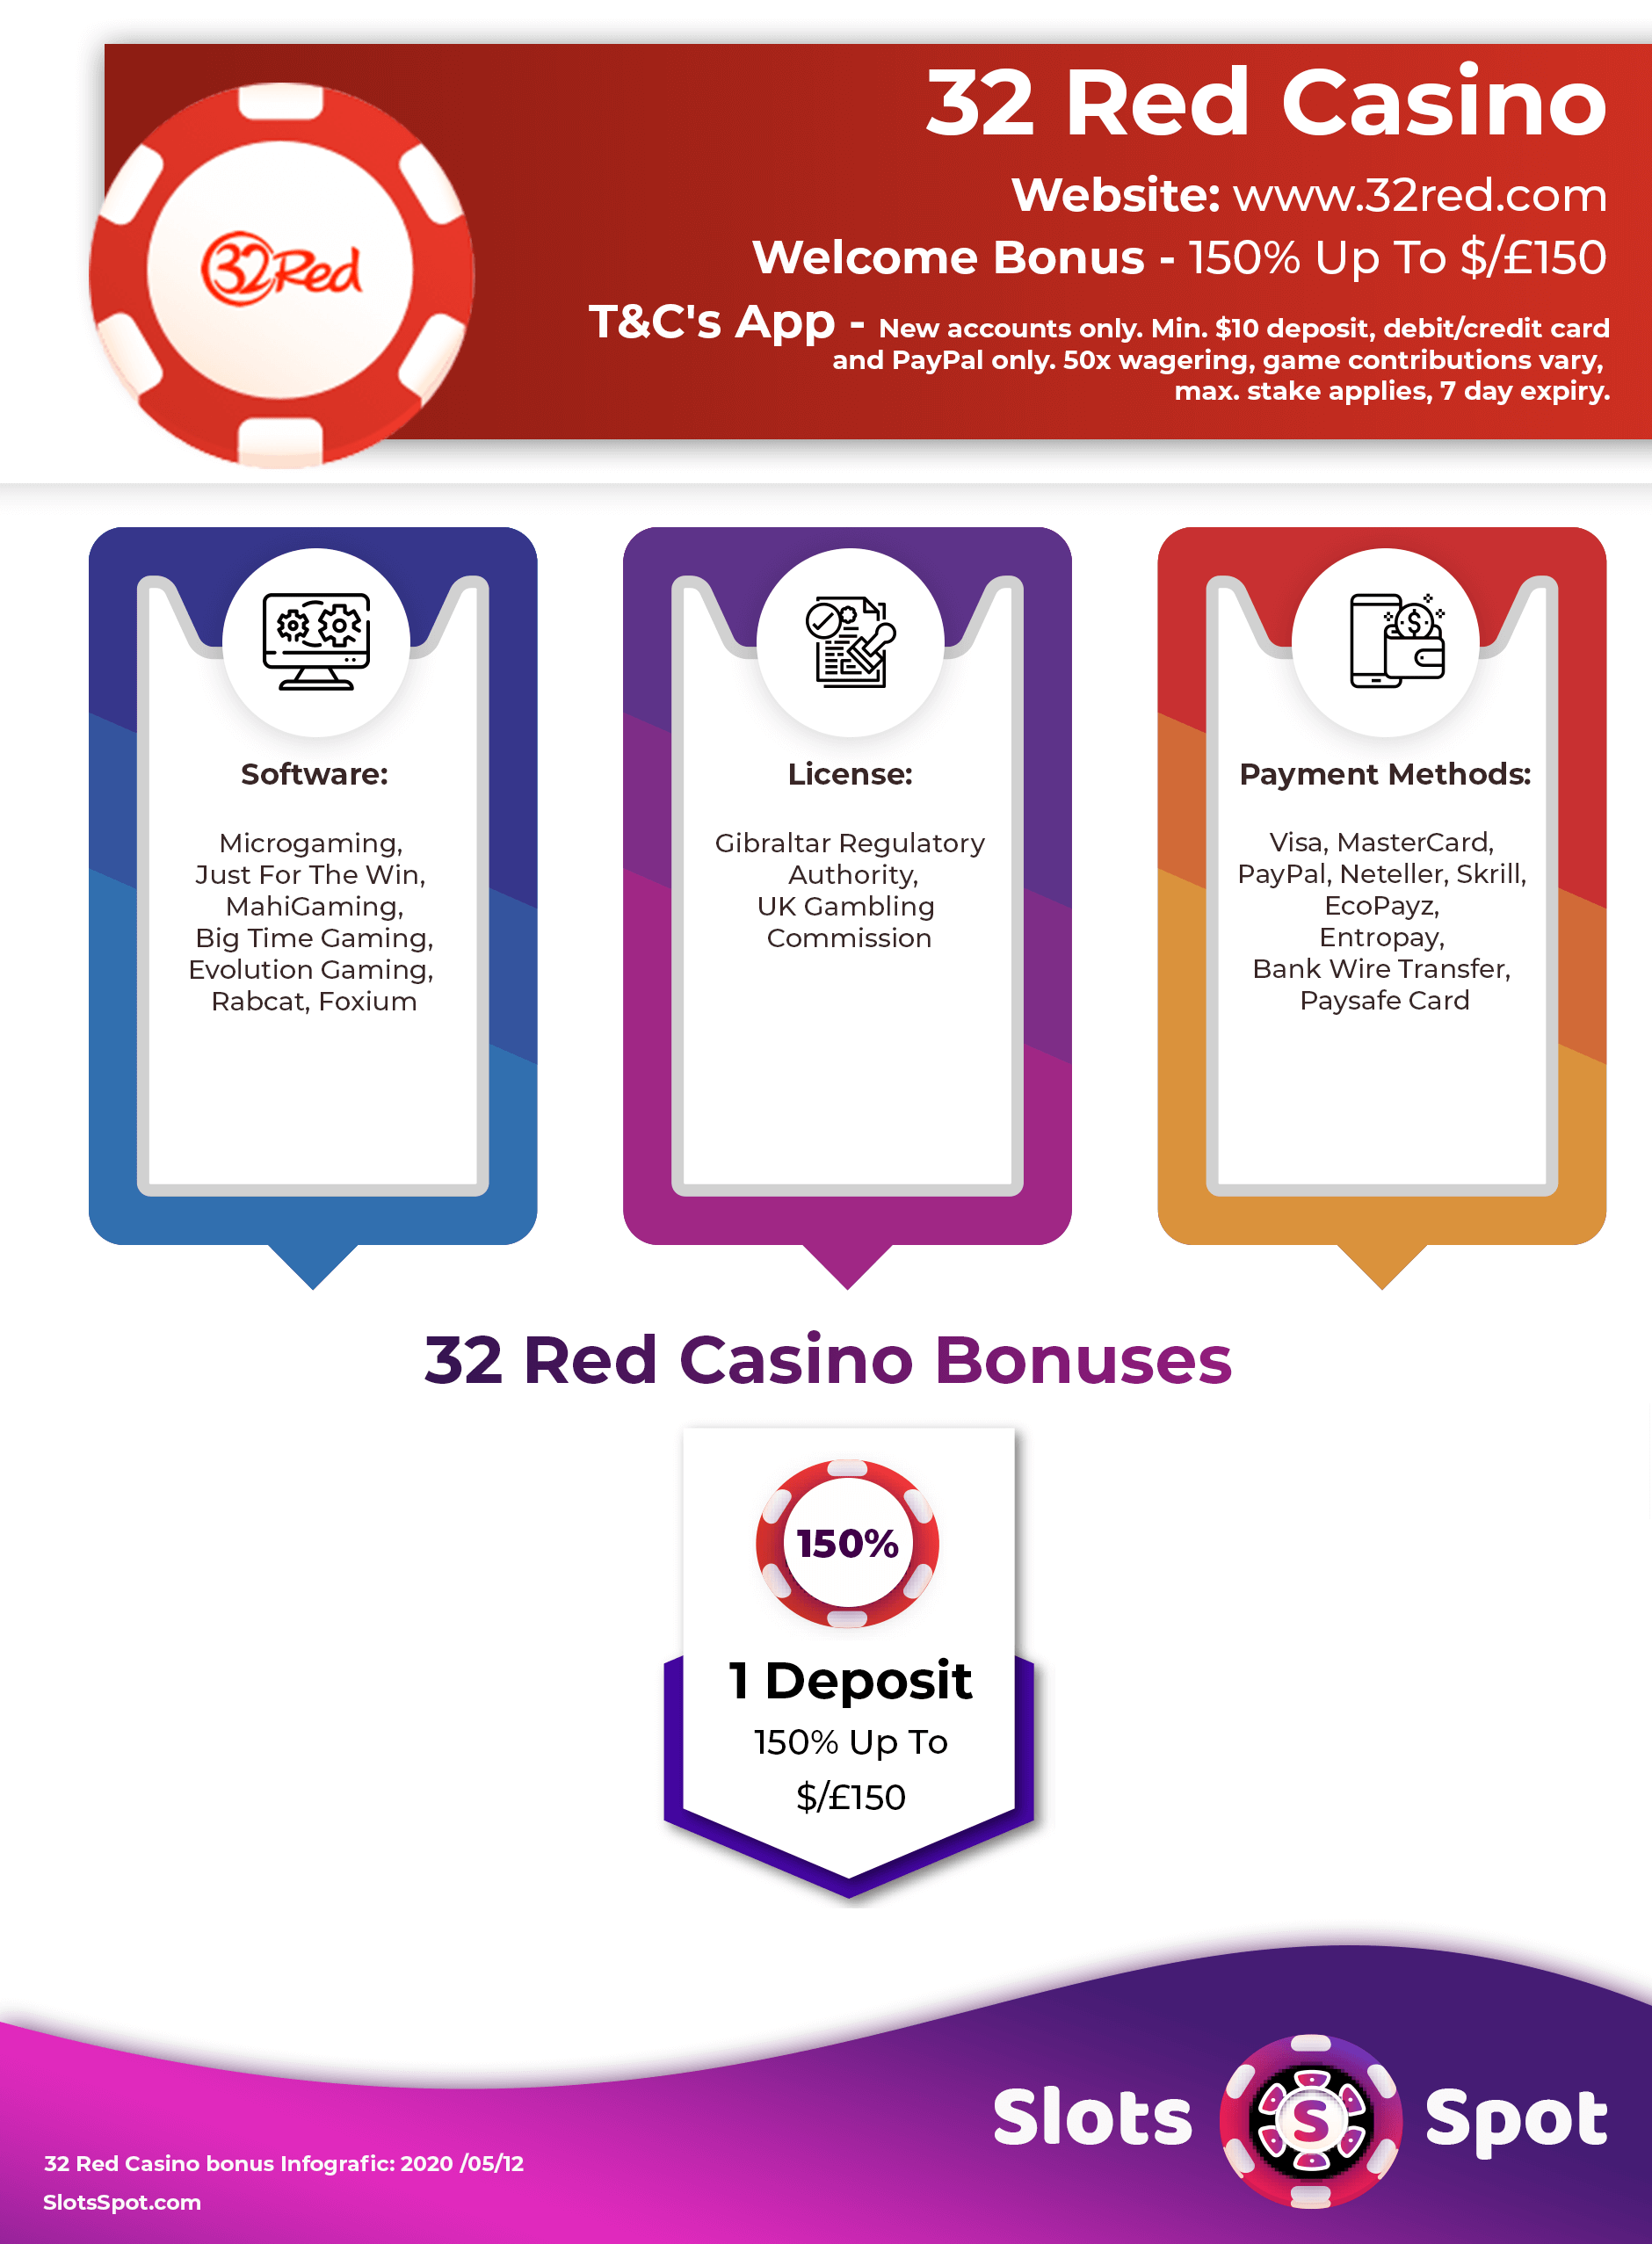 fone casino depositing no rules bonus